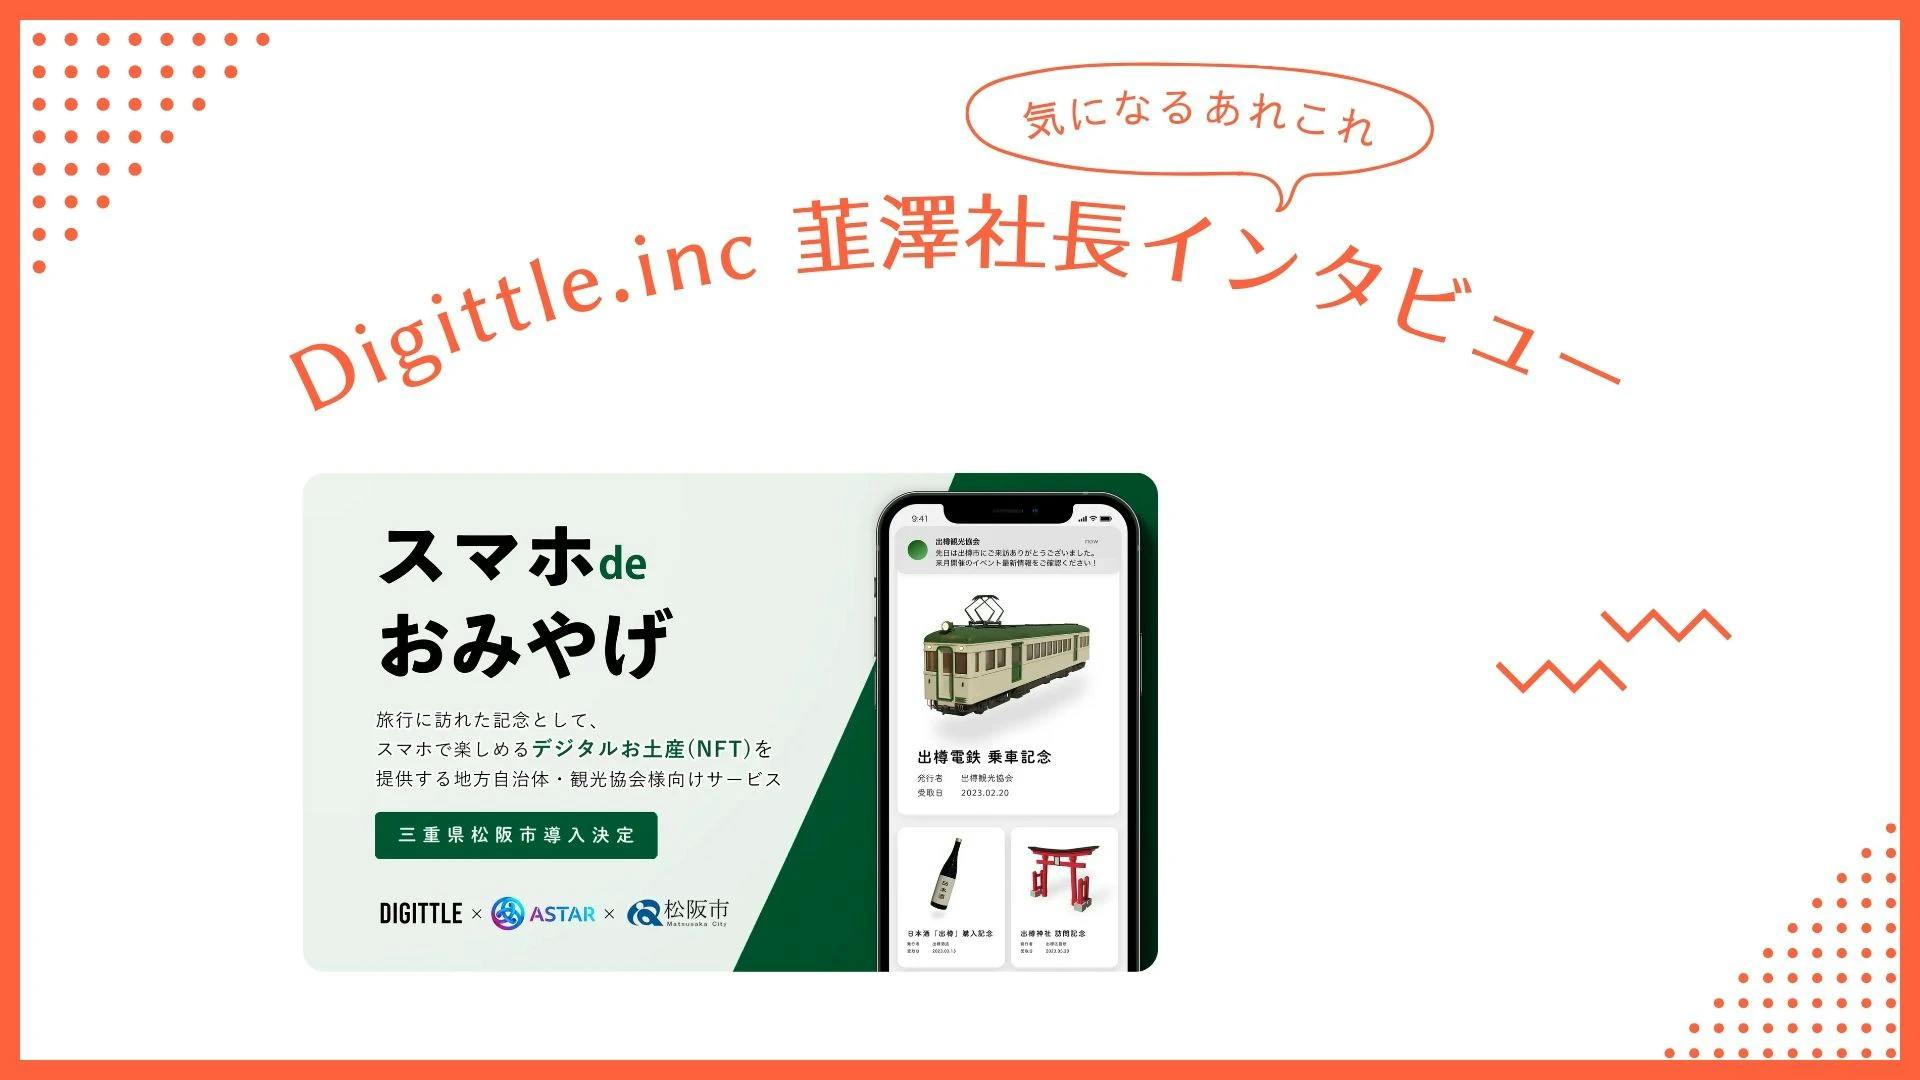 Digittle.inc　韮澤社長インタビュー記事 thumbnail image